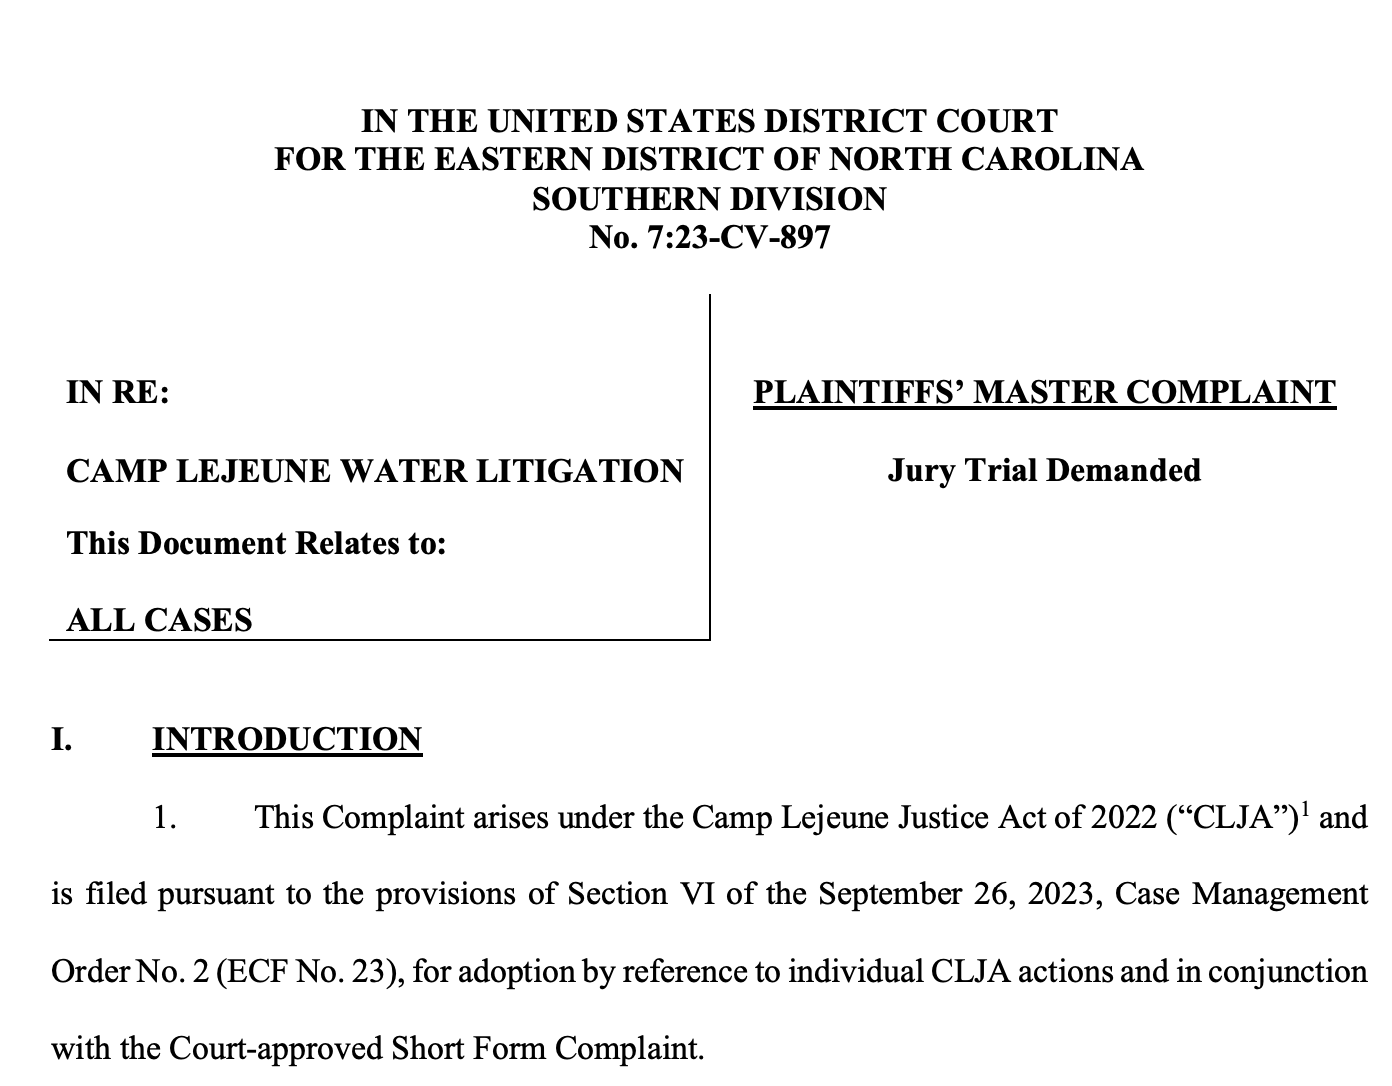 Camp Lejeune Water Litigation Master Complaint (Full Text)